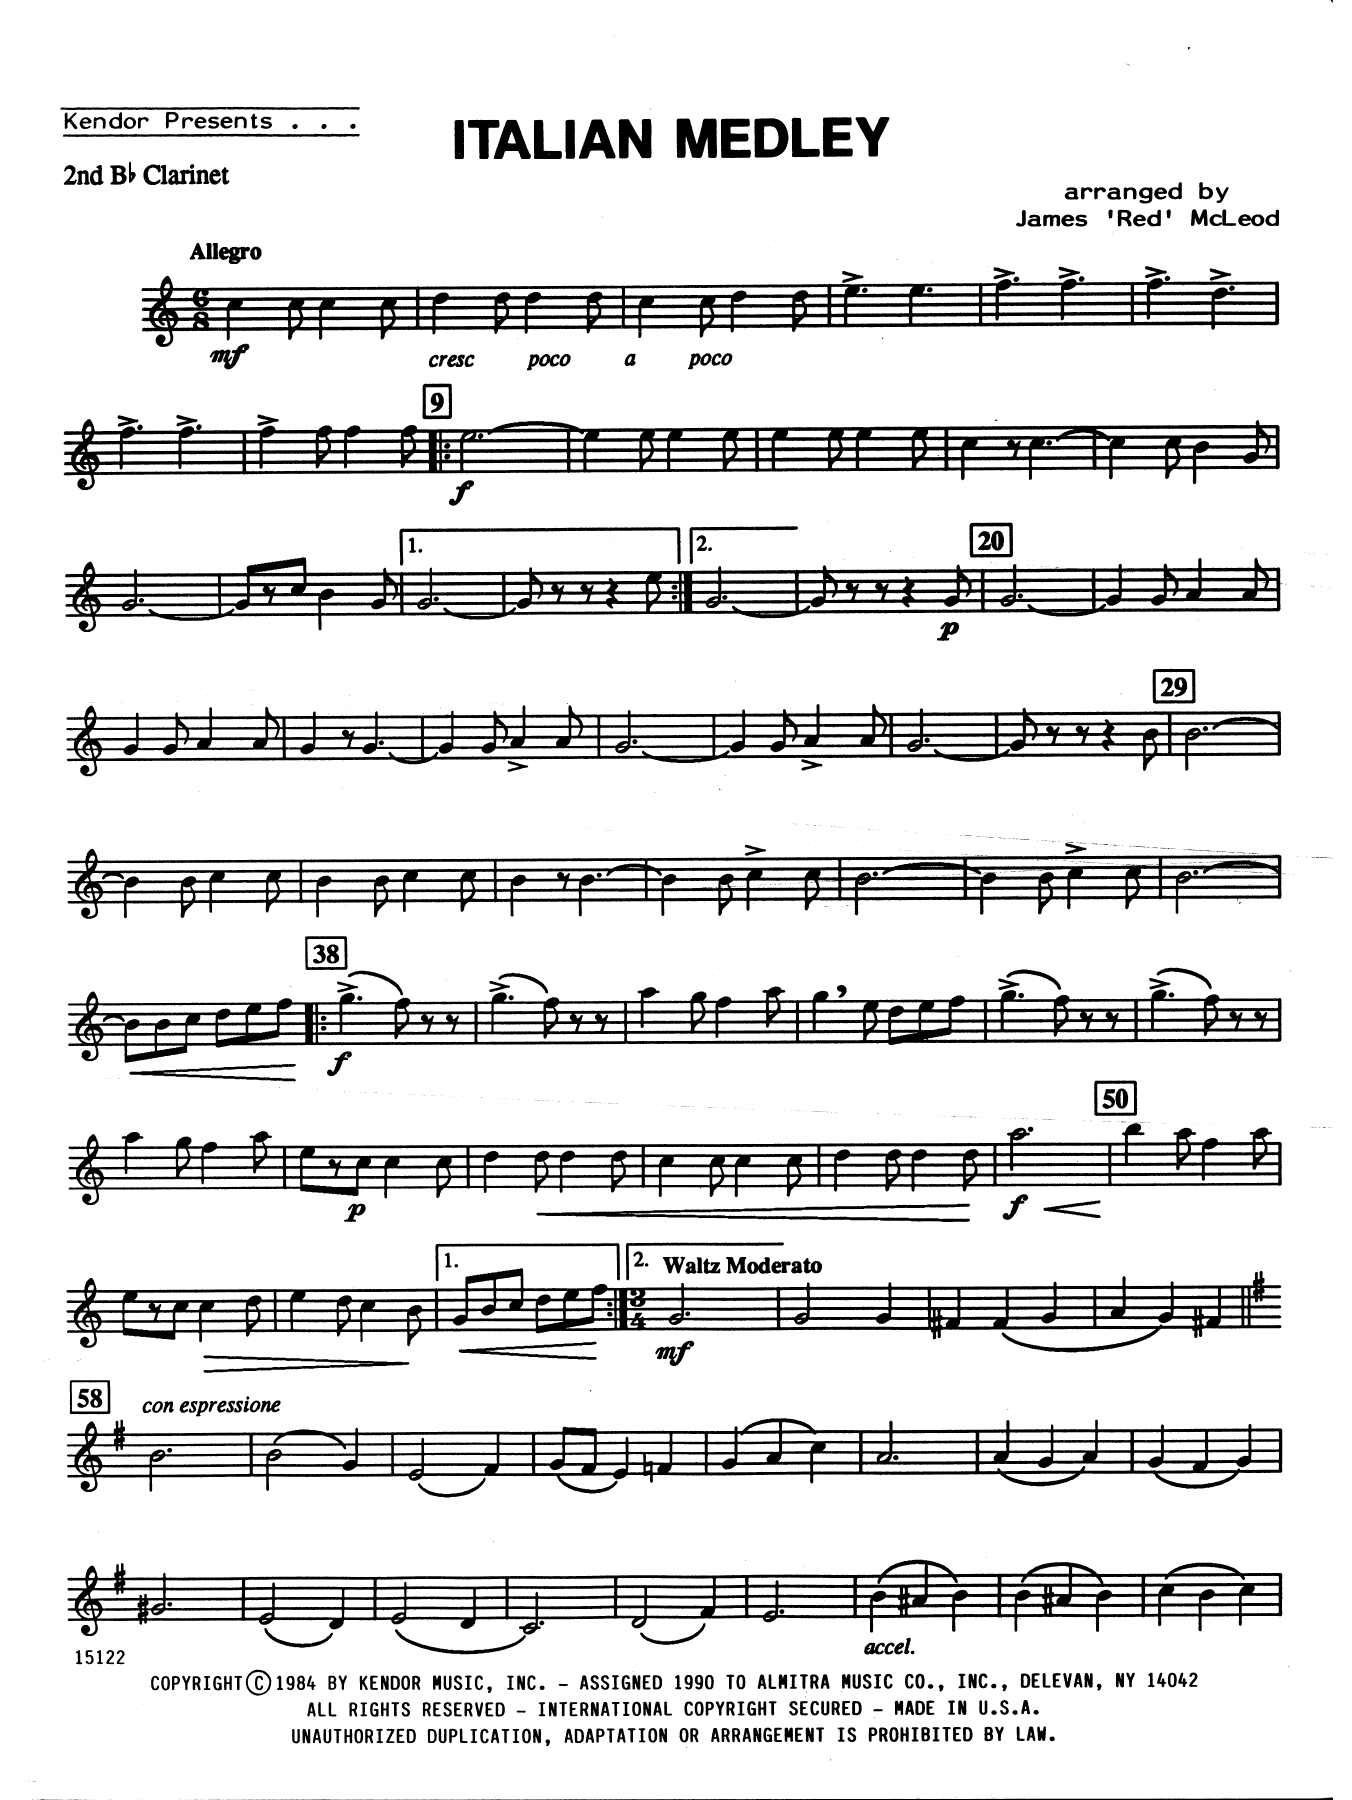 Download James 'Red' McLeod Italian Medley - 2nd Bb Clarinet Sheet Music